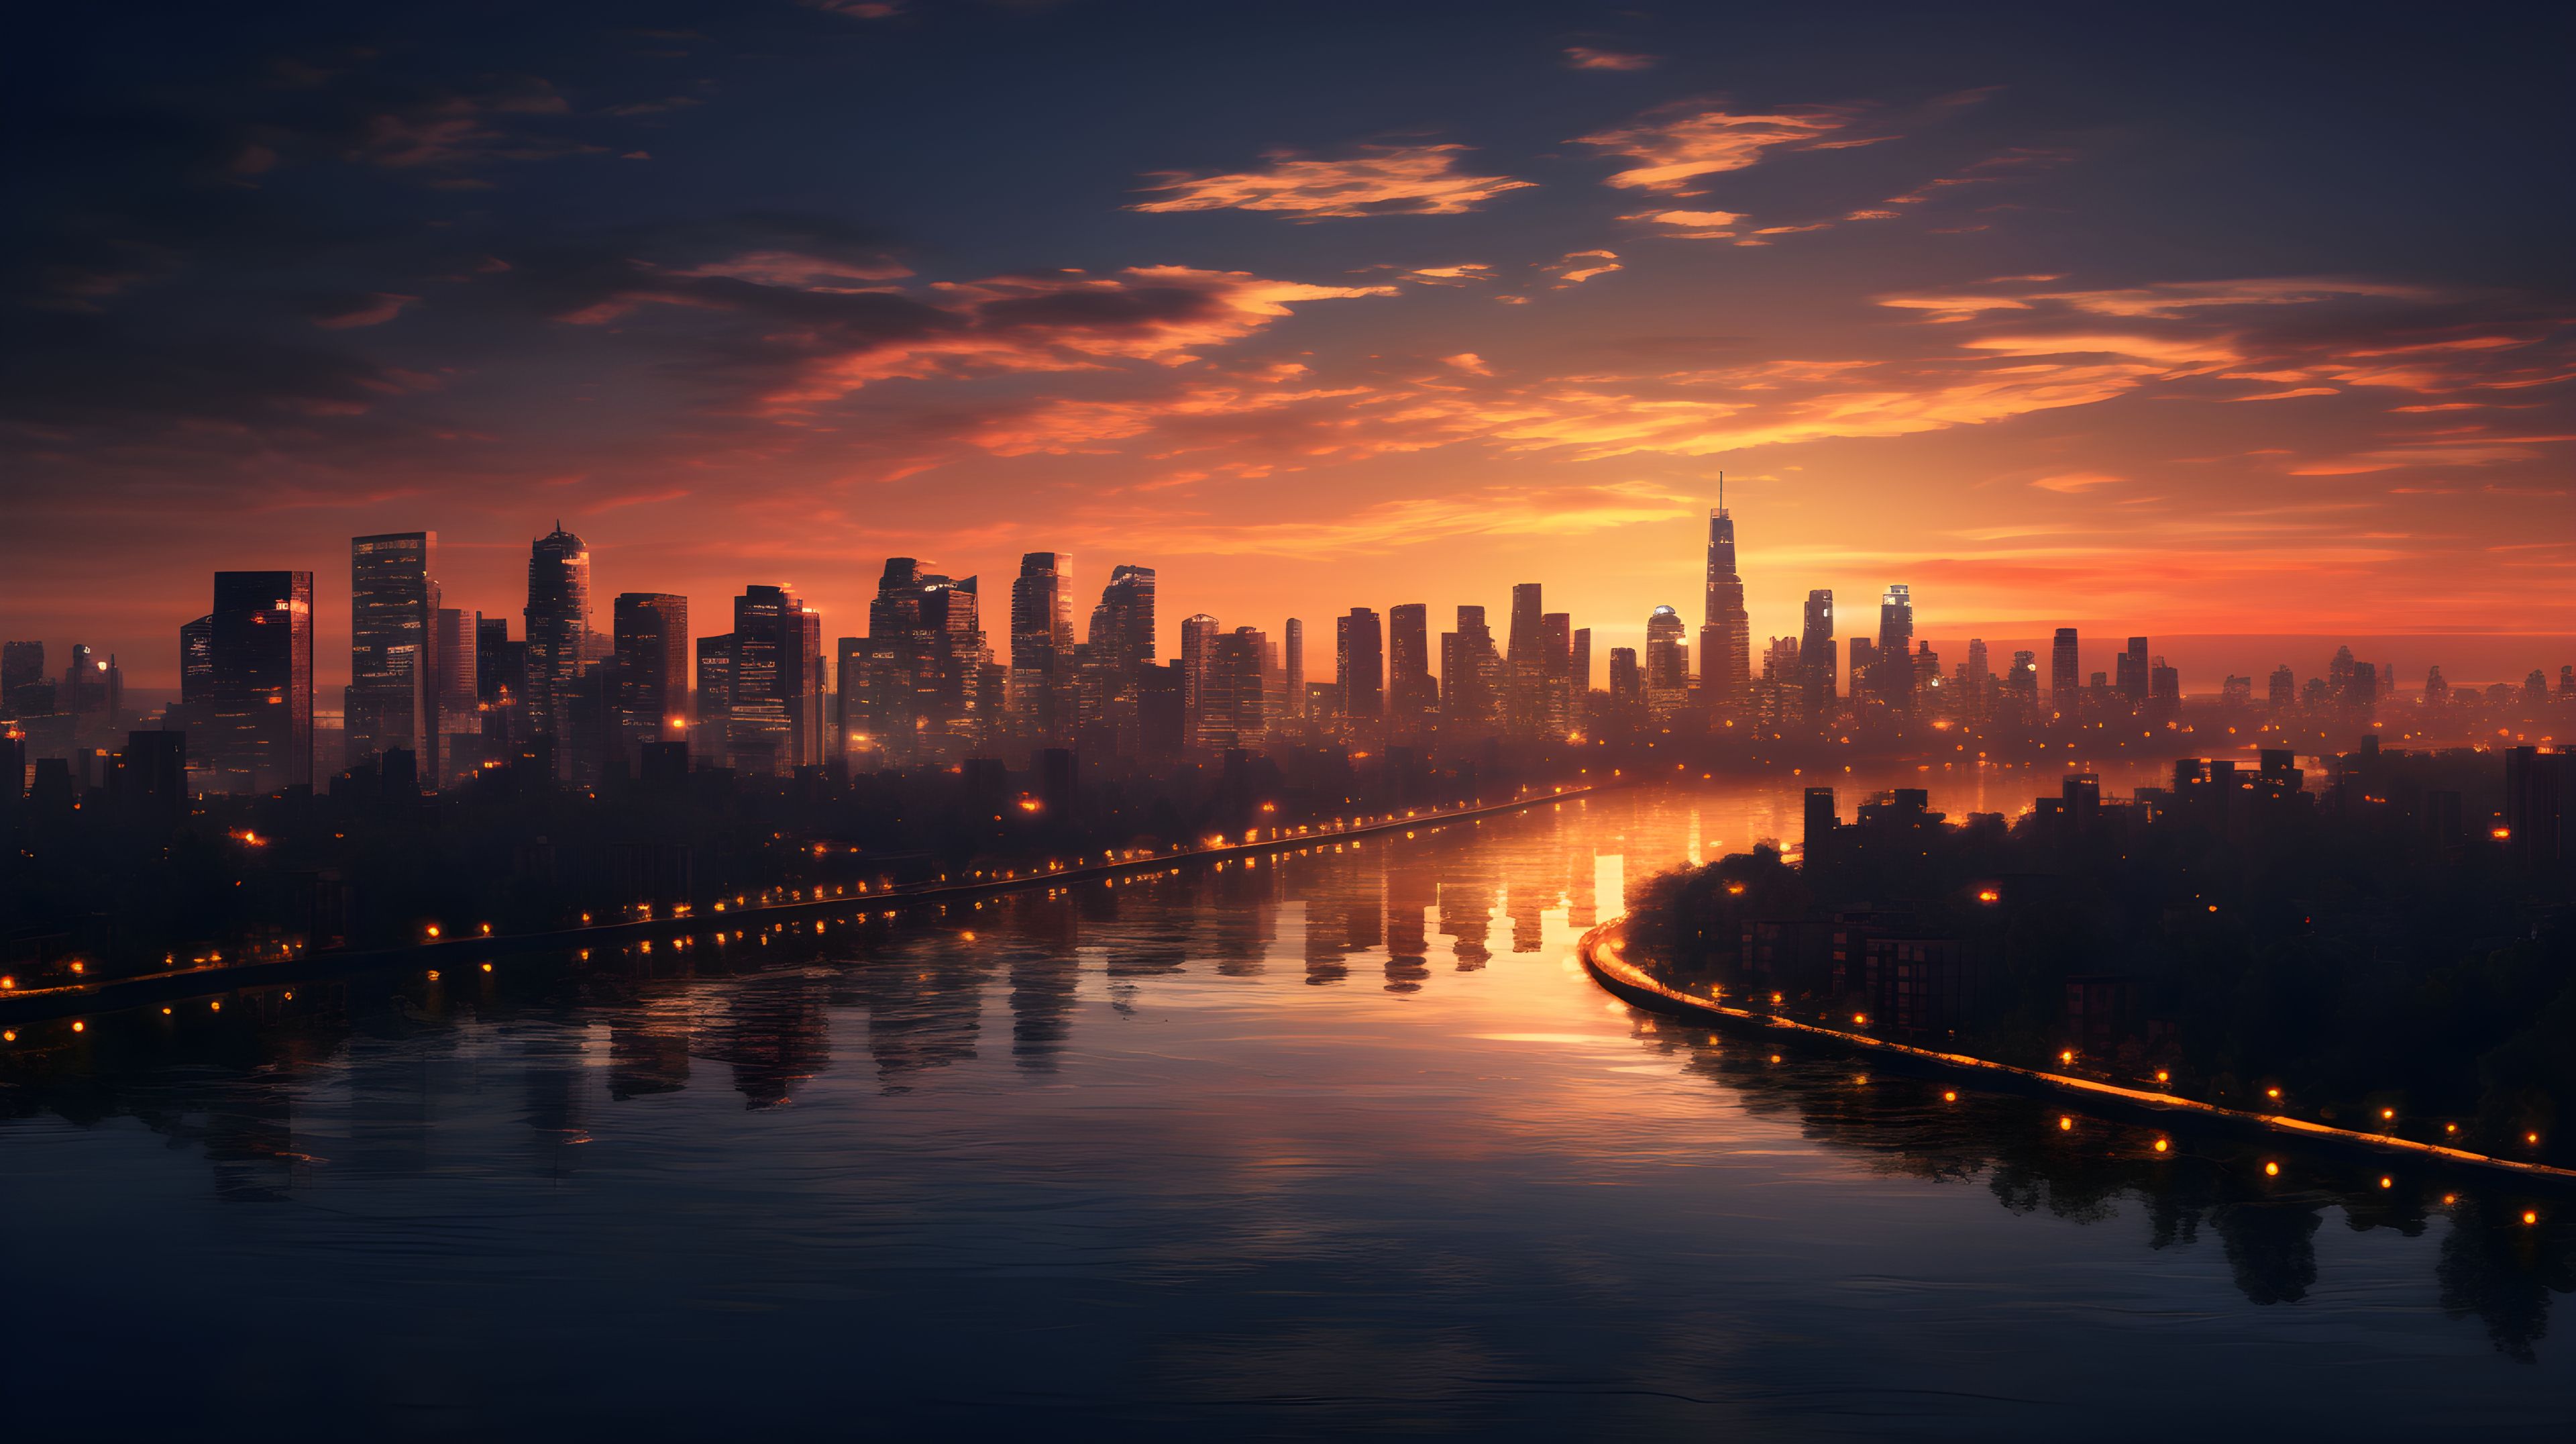 Aesthetic Cityscape 4K Sunset Wallpaper, HD Artist 4K Wallpaper, Image and Background